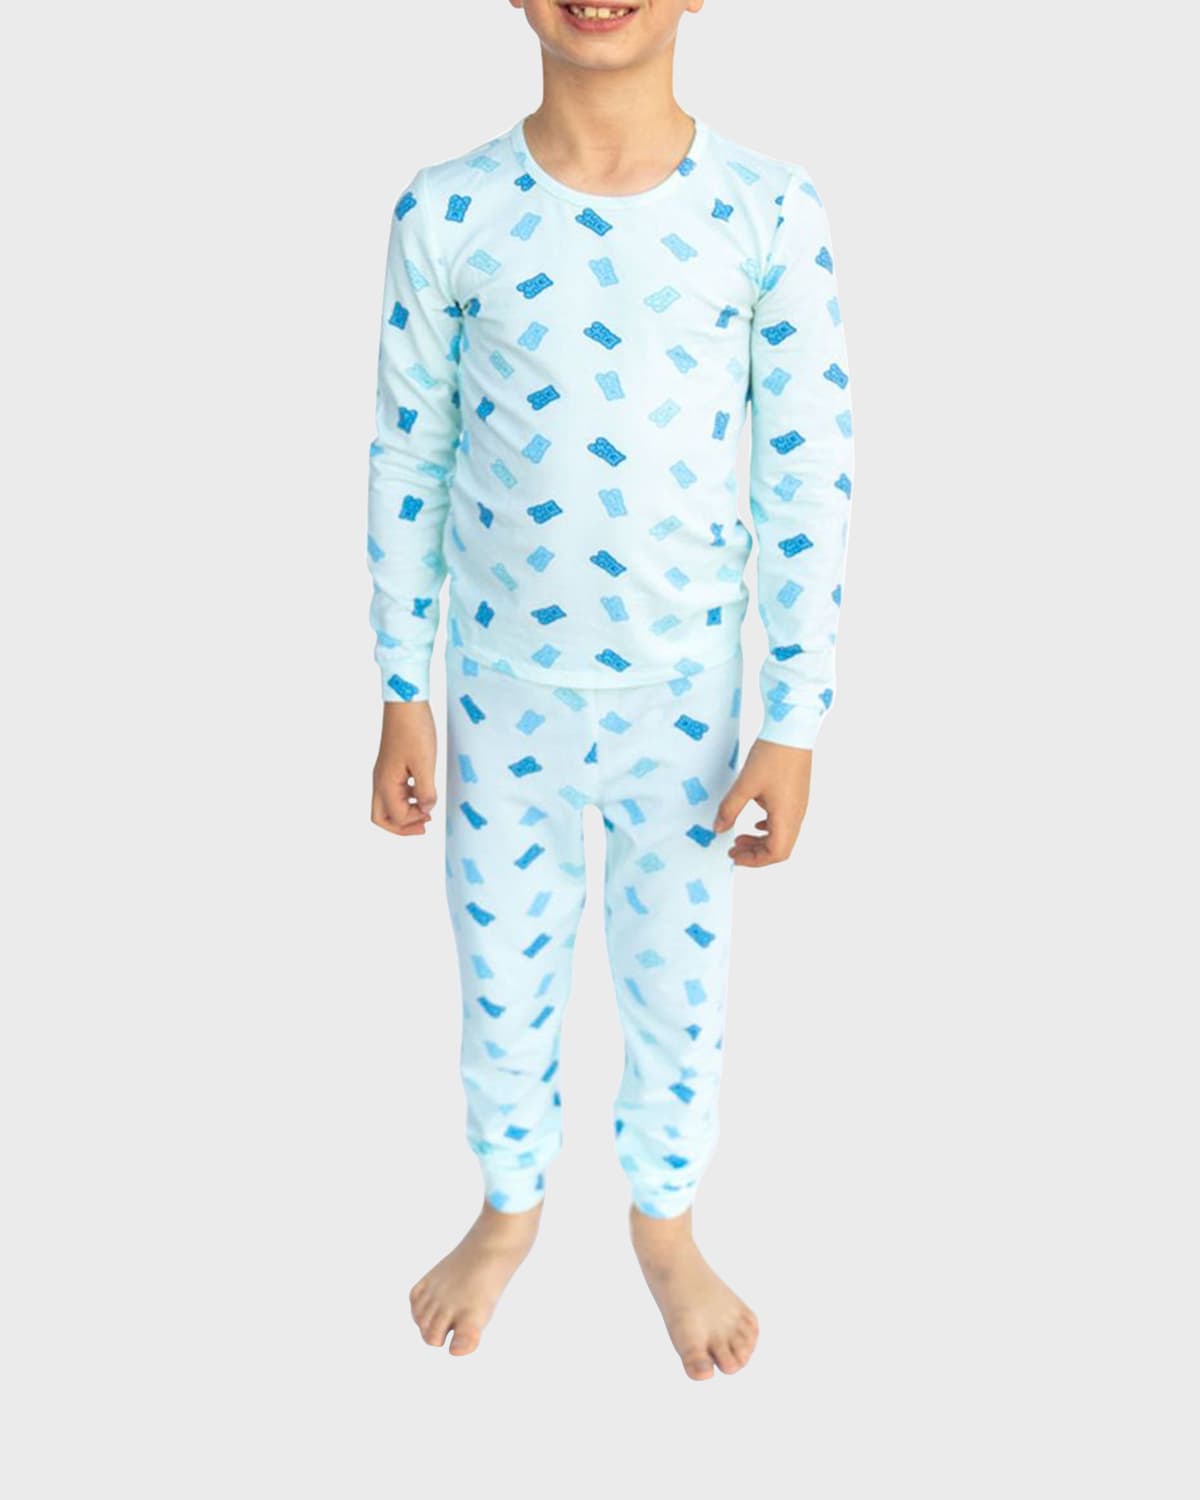 Kid's Gummy Bears Pajama Set, Size 12M-8